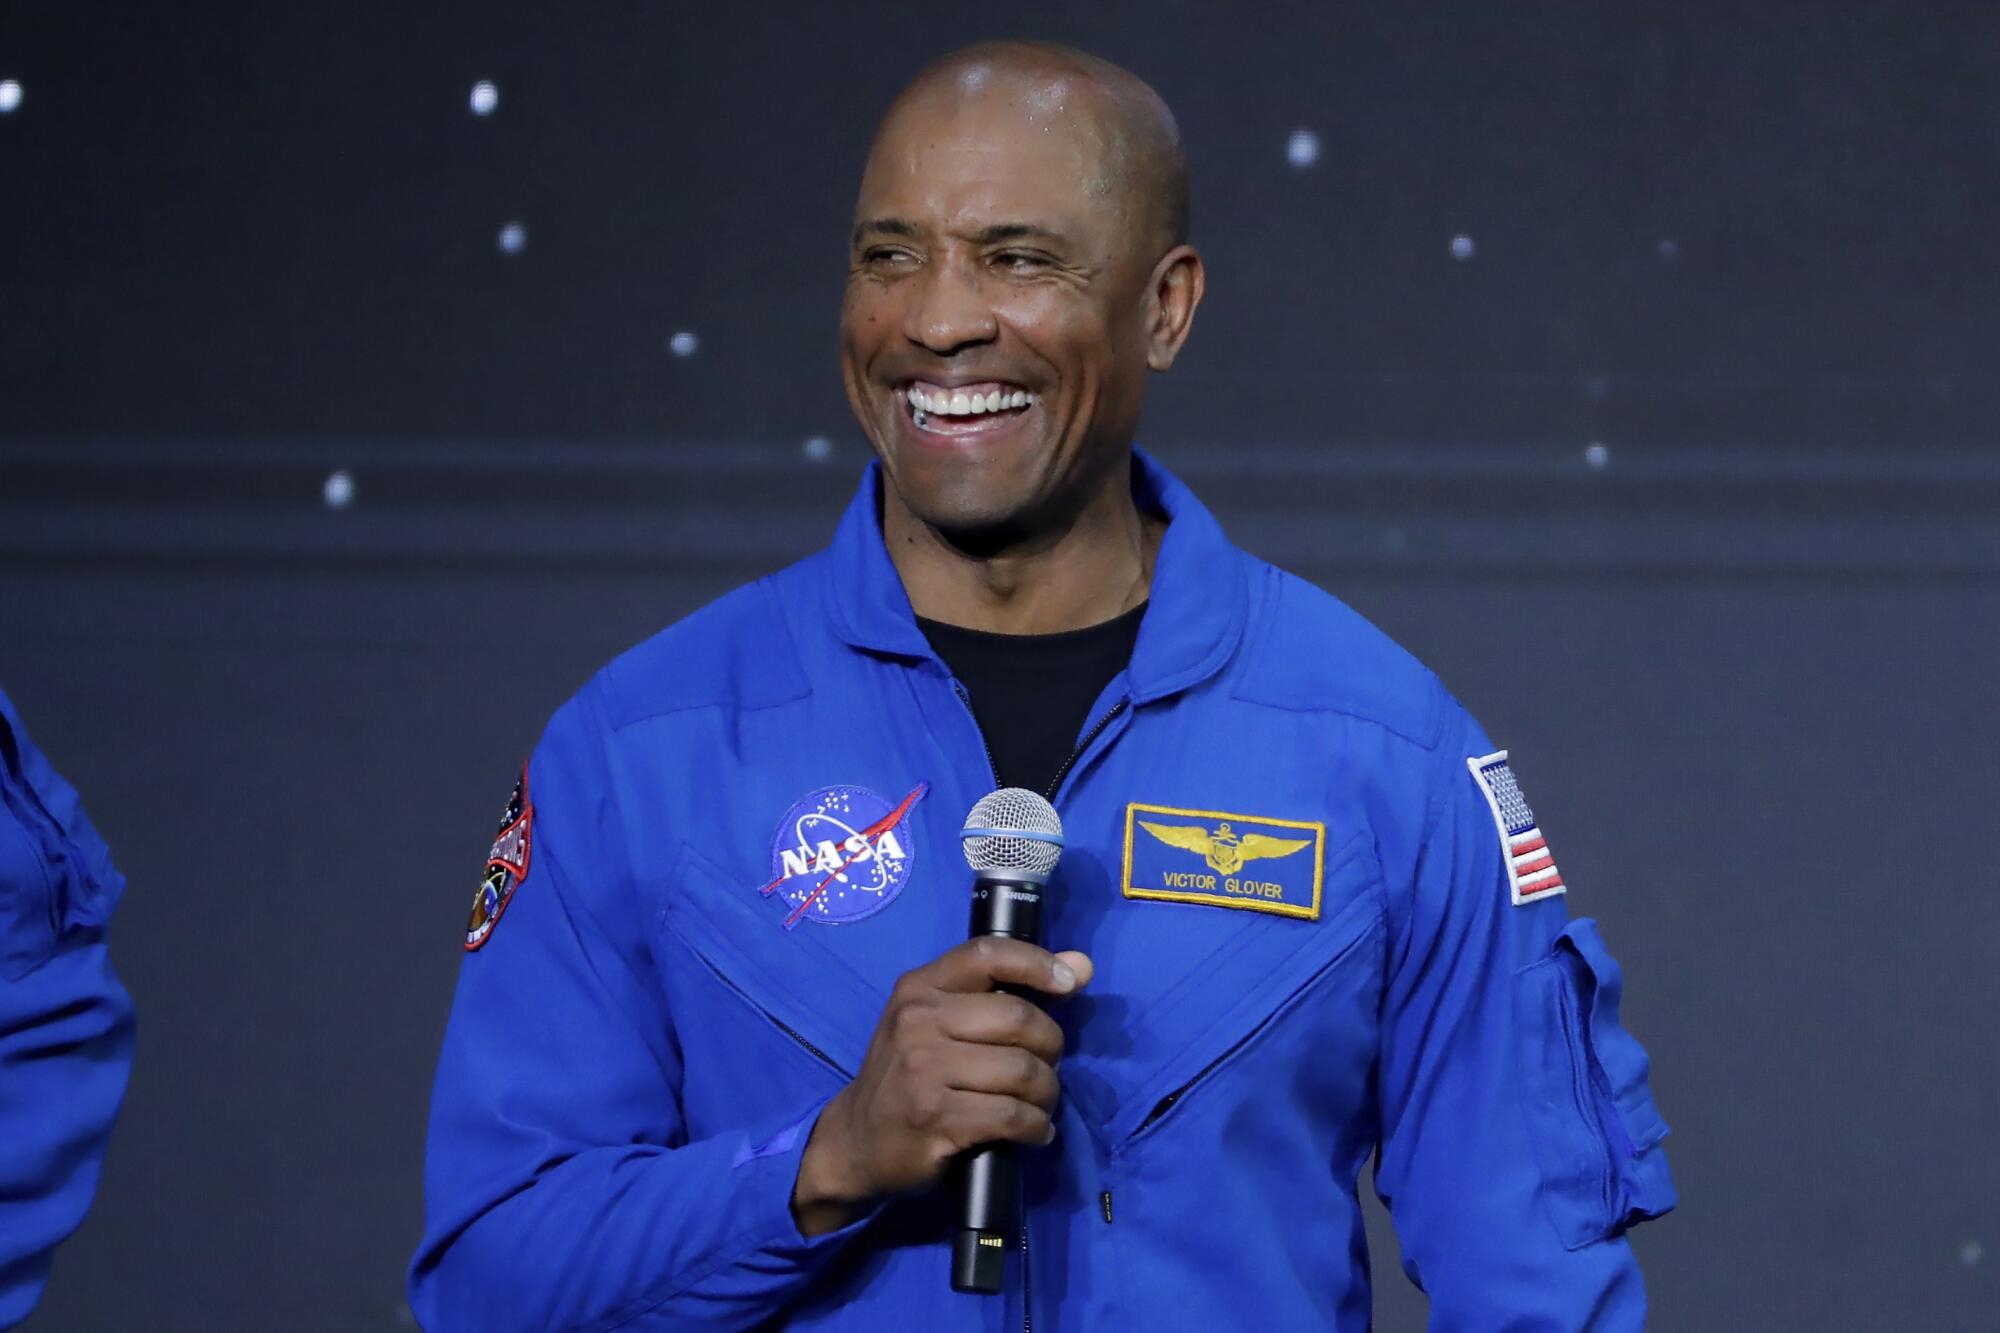 Victor Glover Jr. speaks after he was announced as mission pilot for the Artemis II lunar program. 